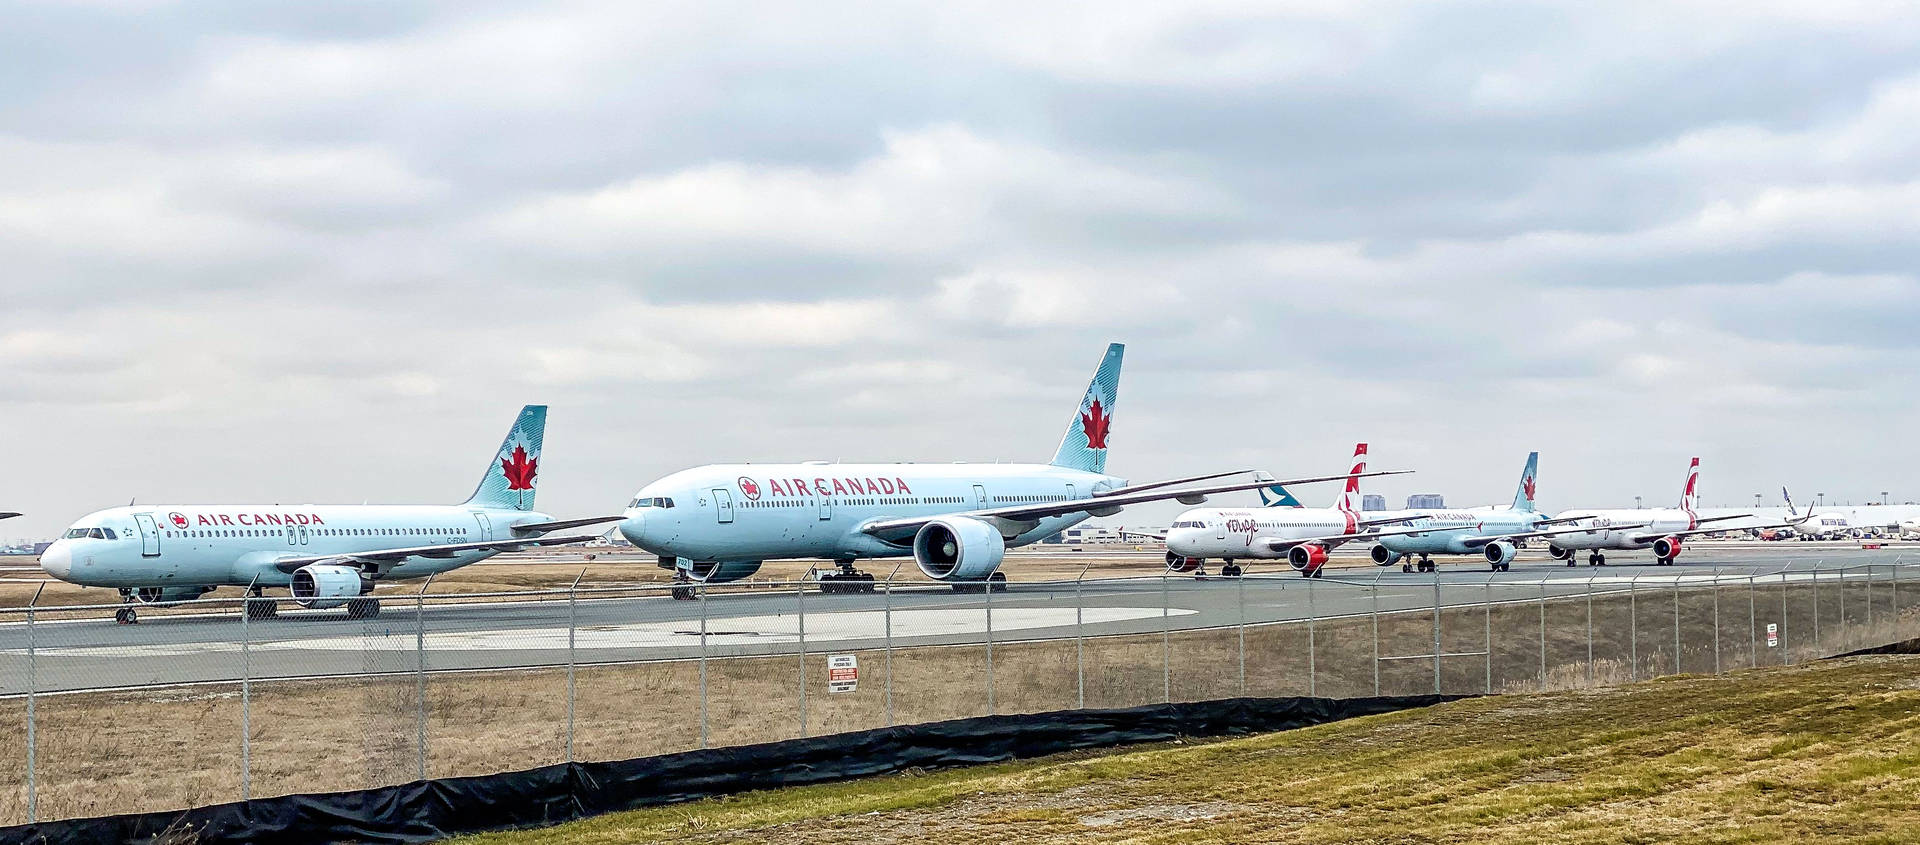 Air Canada Planes On Runway Wallpaper